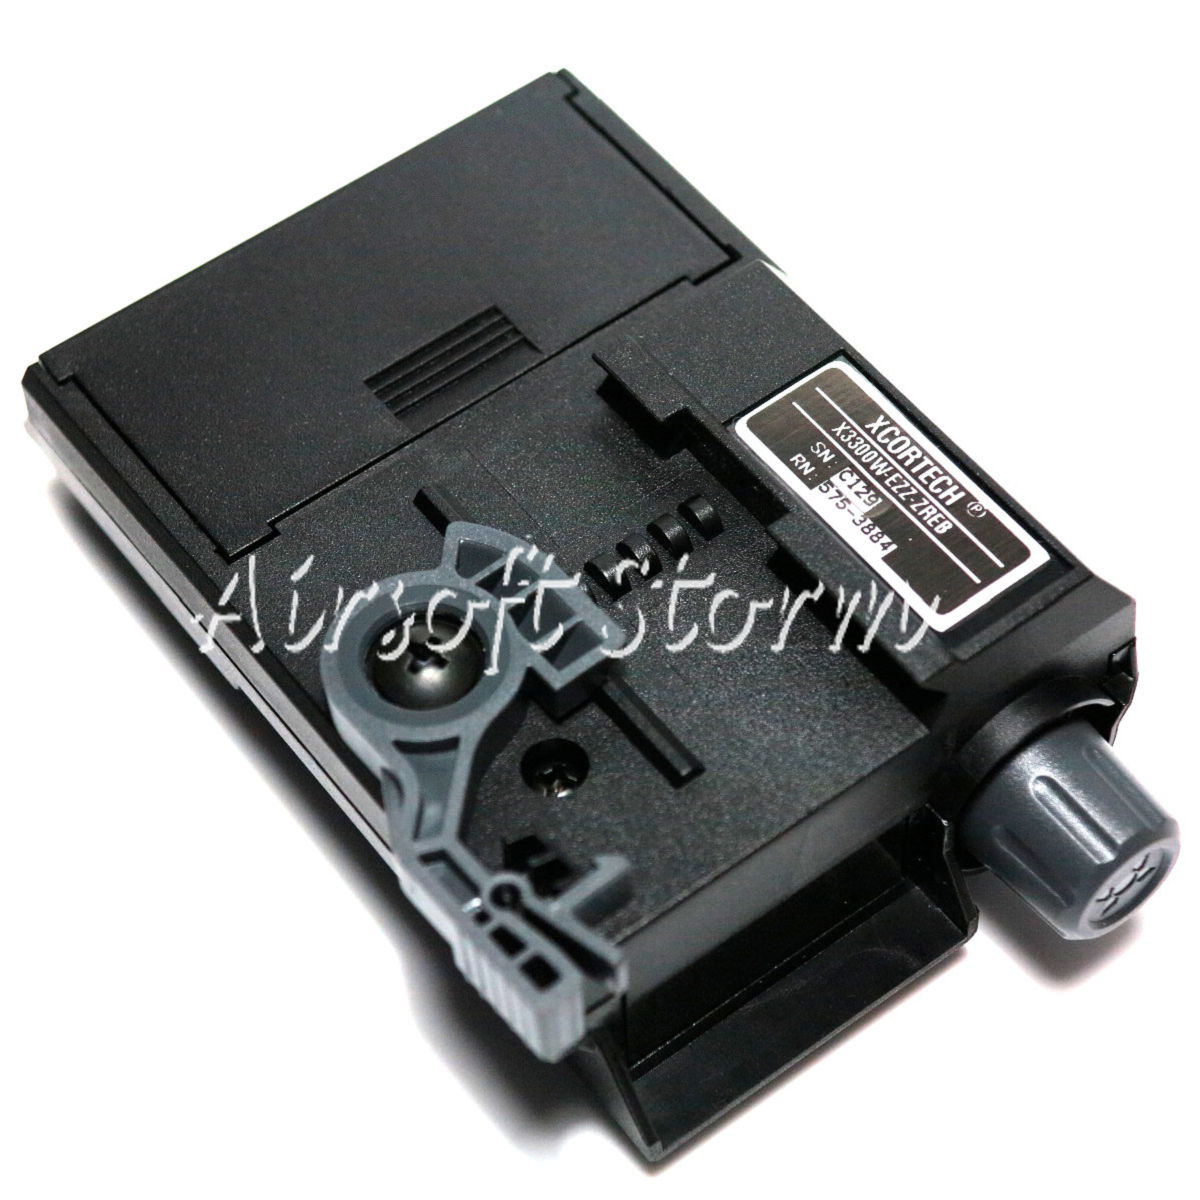 AEG Gear Xcortech X3300W Advanced BB Control System Shoot Chronoscope Black